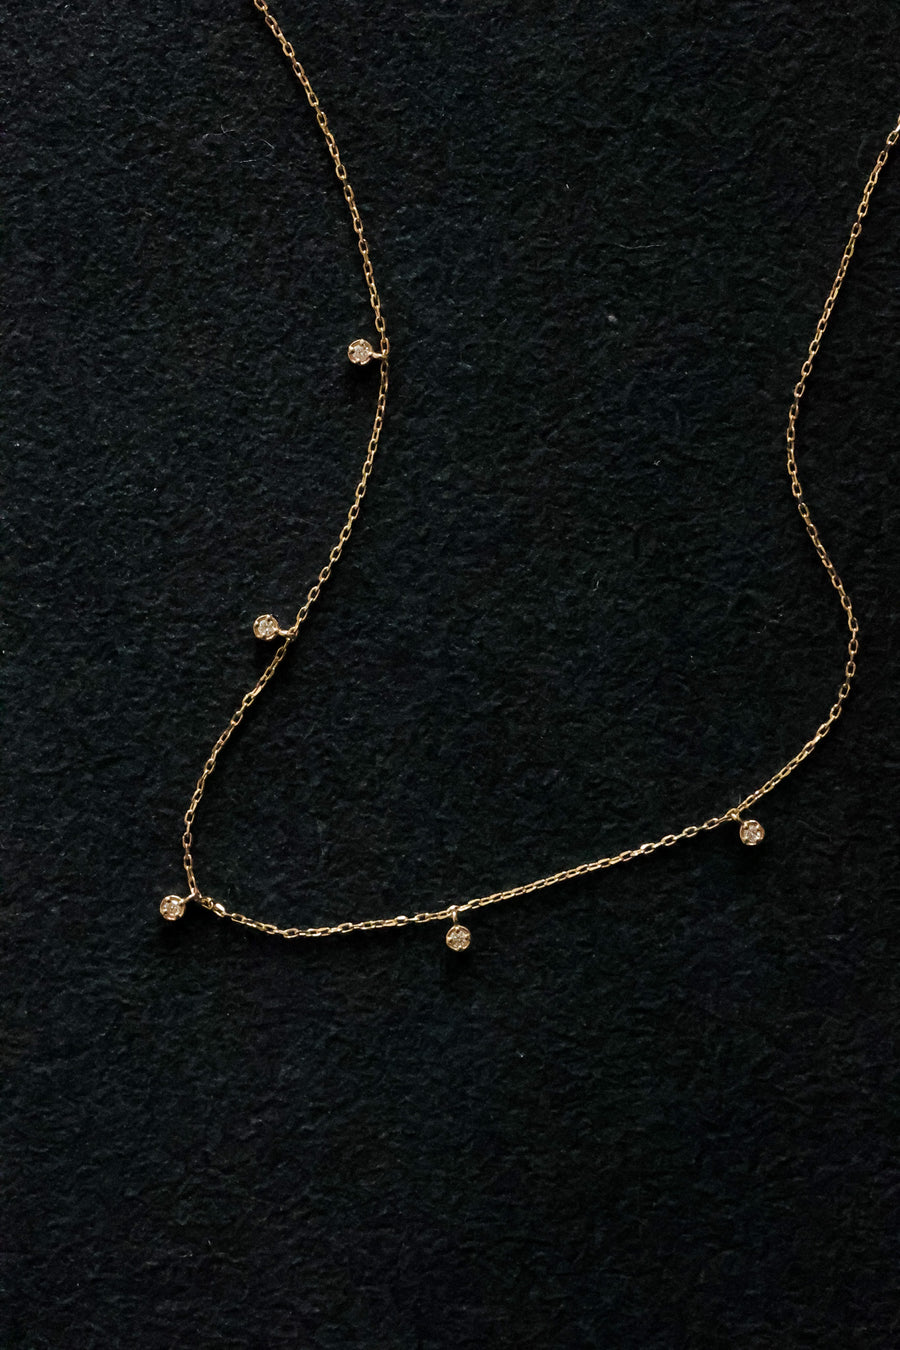 [14K] Roman stone necklace